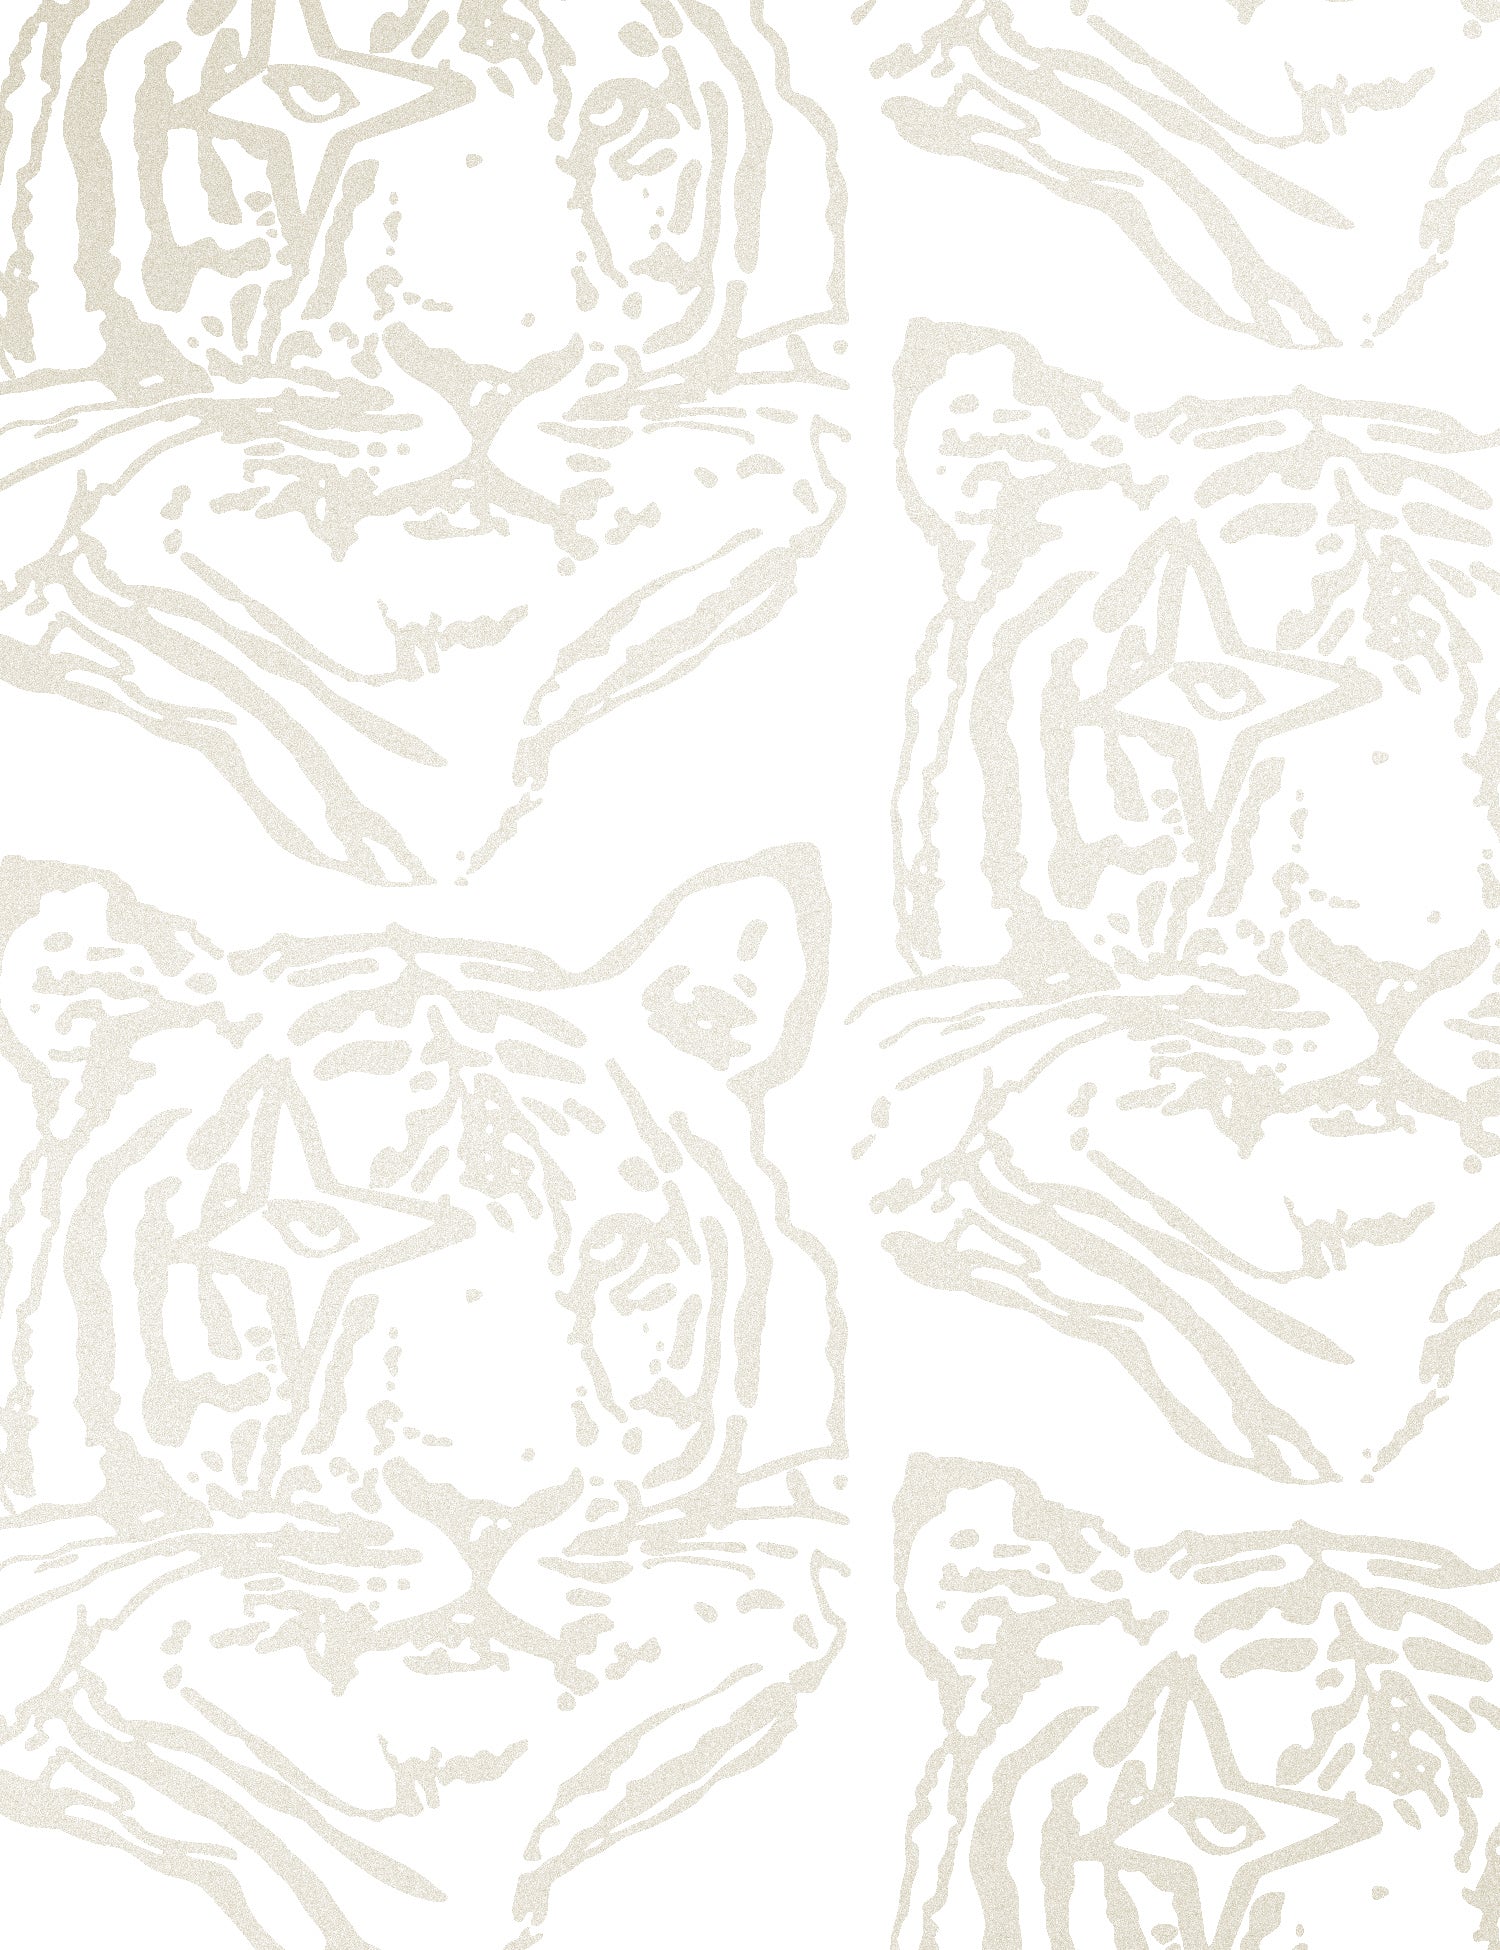 Star Tiger Designer Wallpaper by Aimée Wilder and Ivana Helsinki